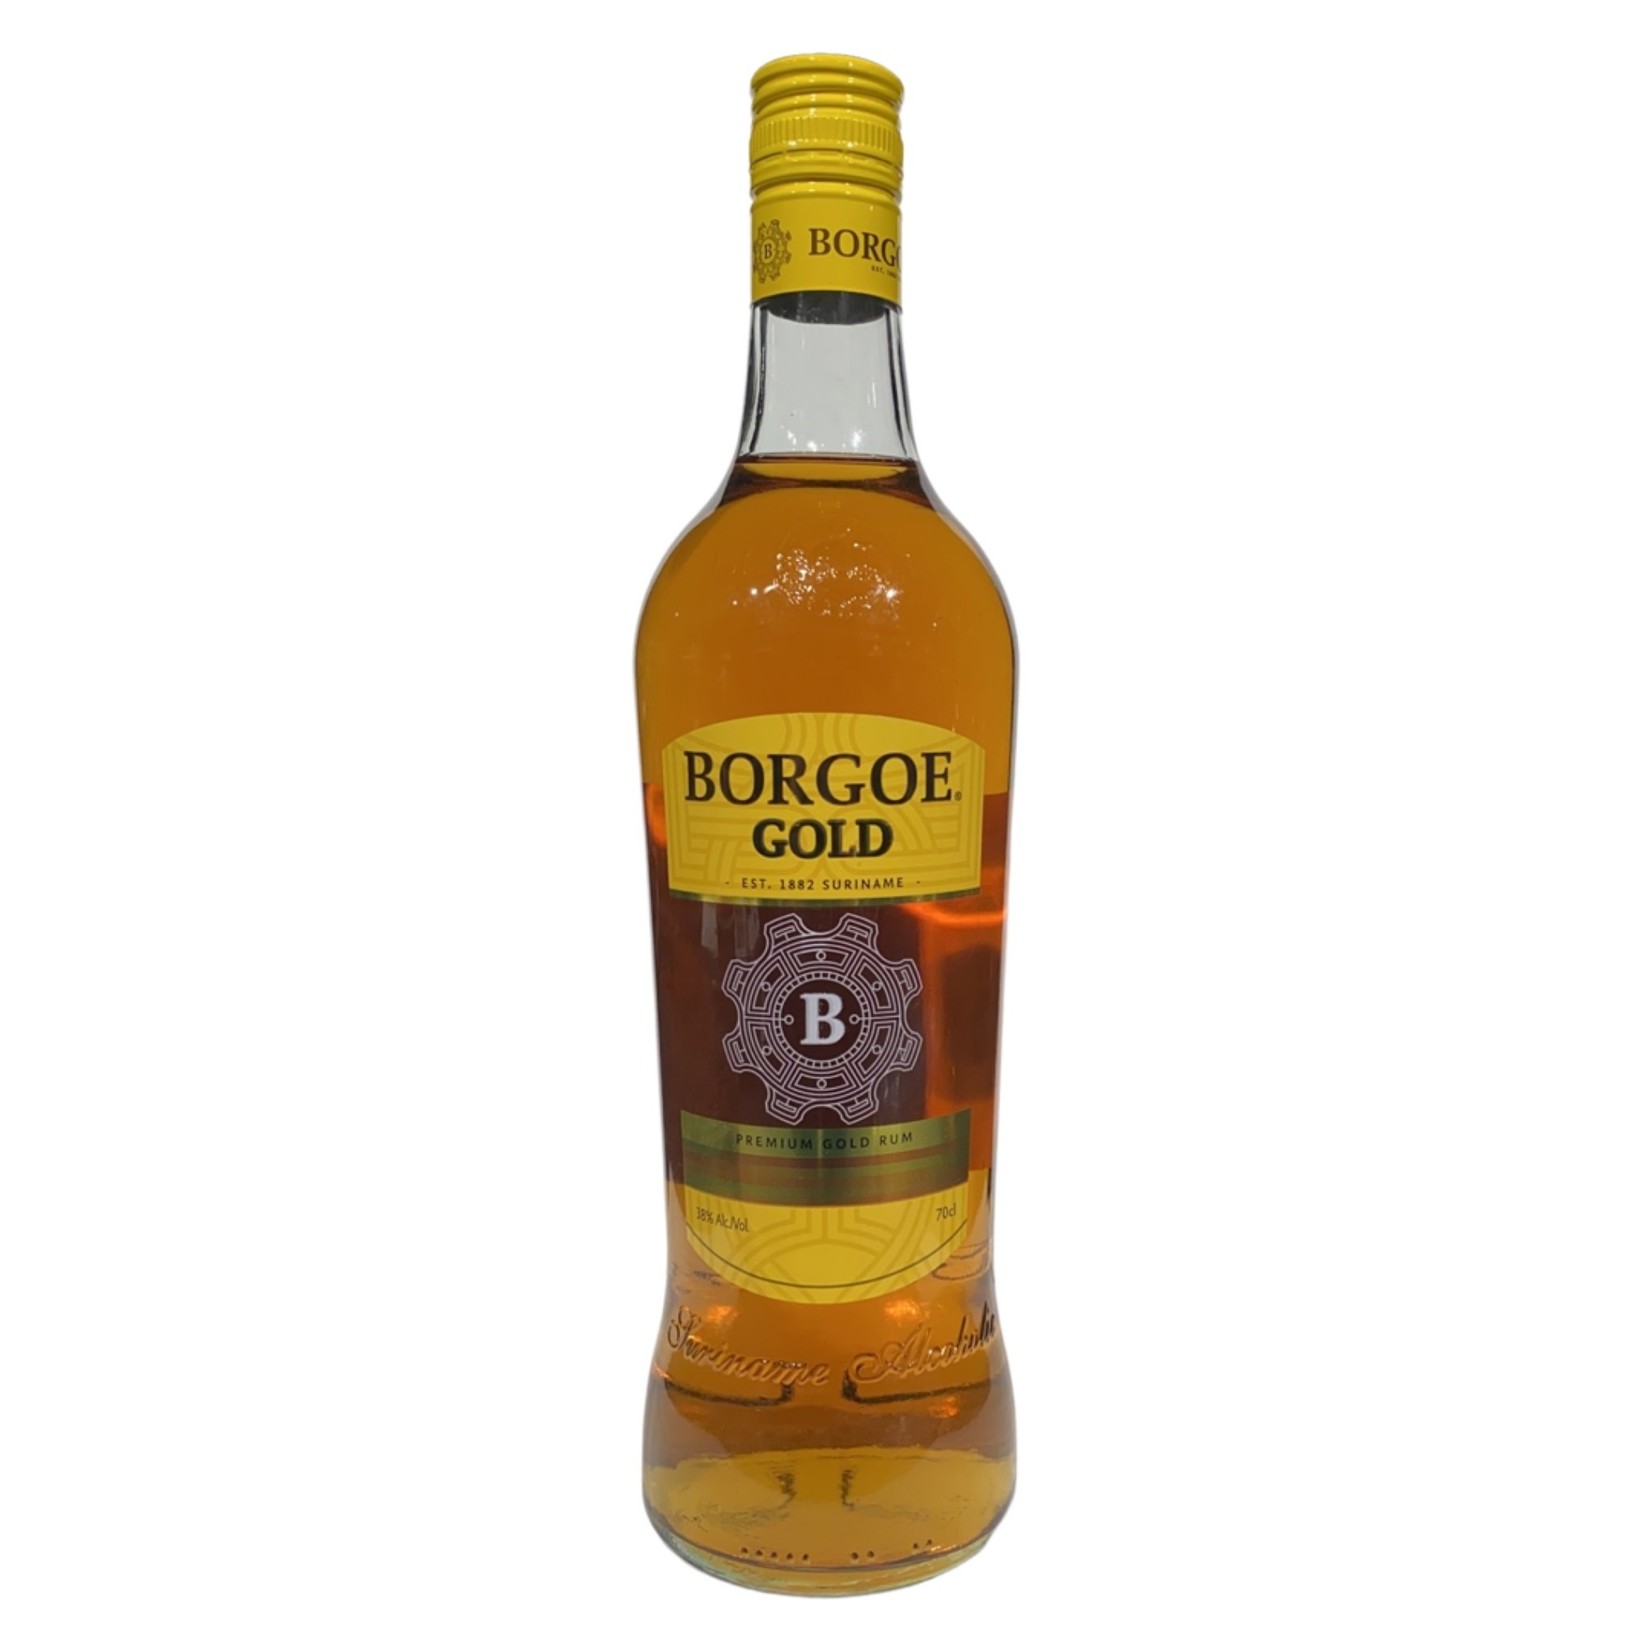 Borgoe Gold 0,7 ltr